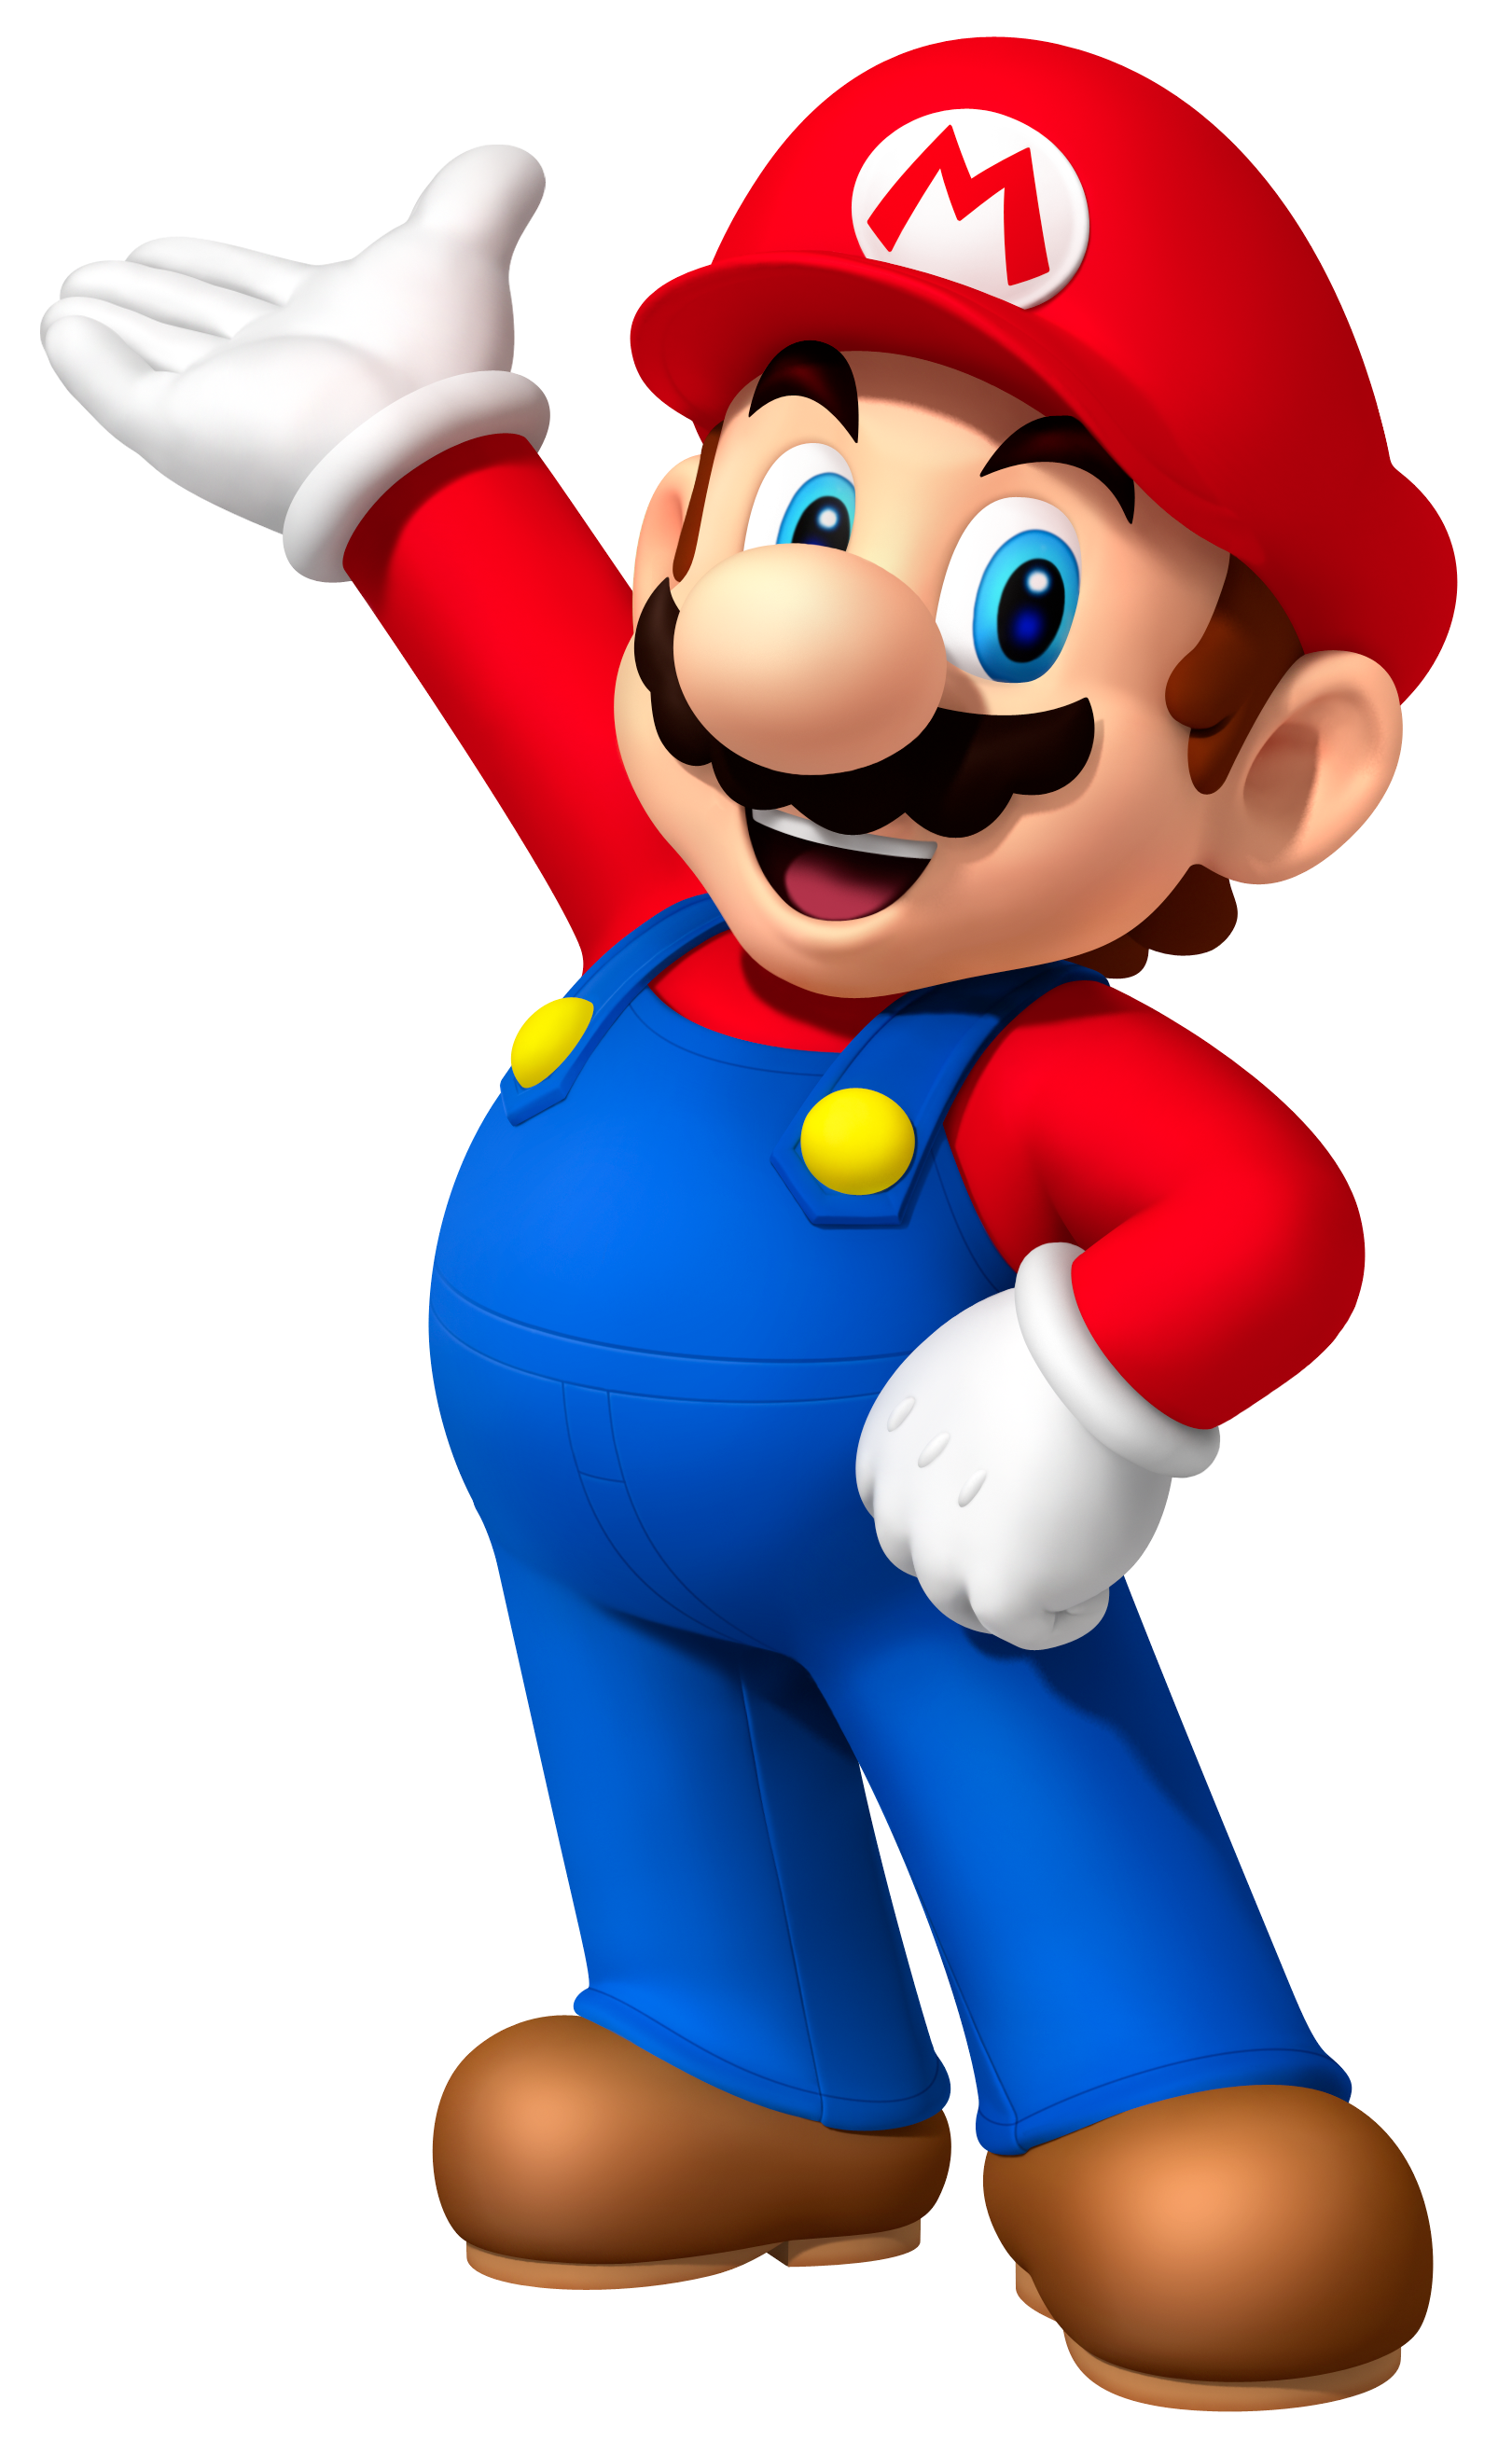 Super Mario Bros.: Bowser / Characters - TV Tropes